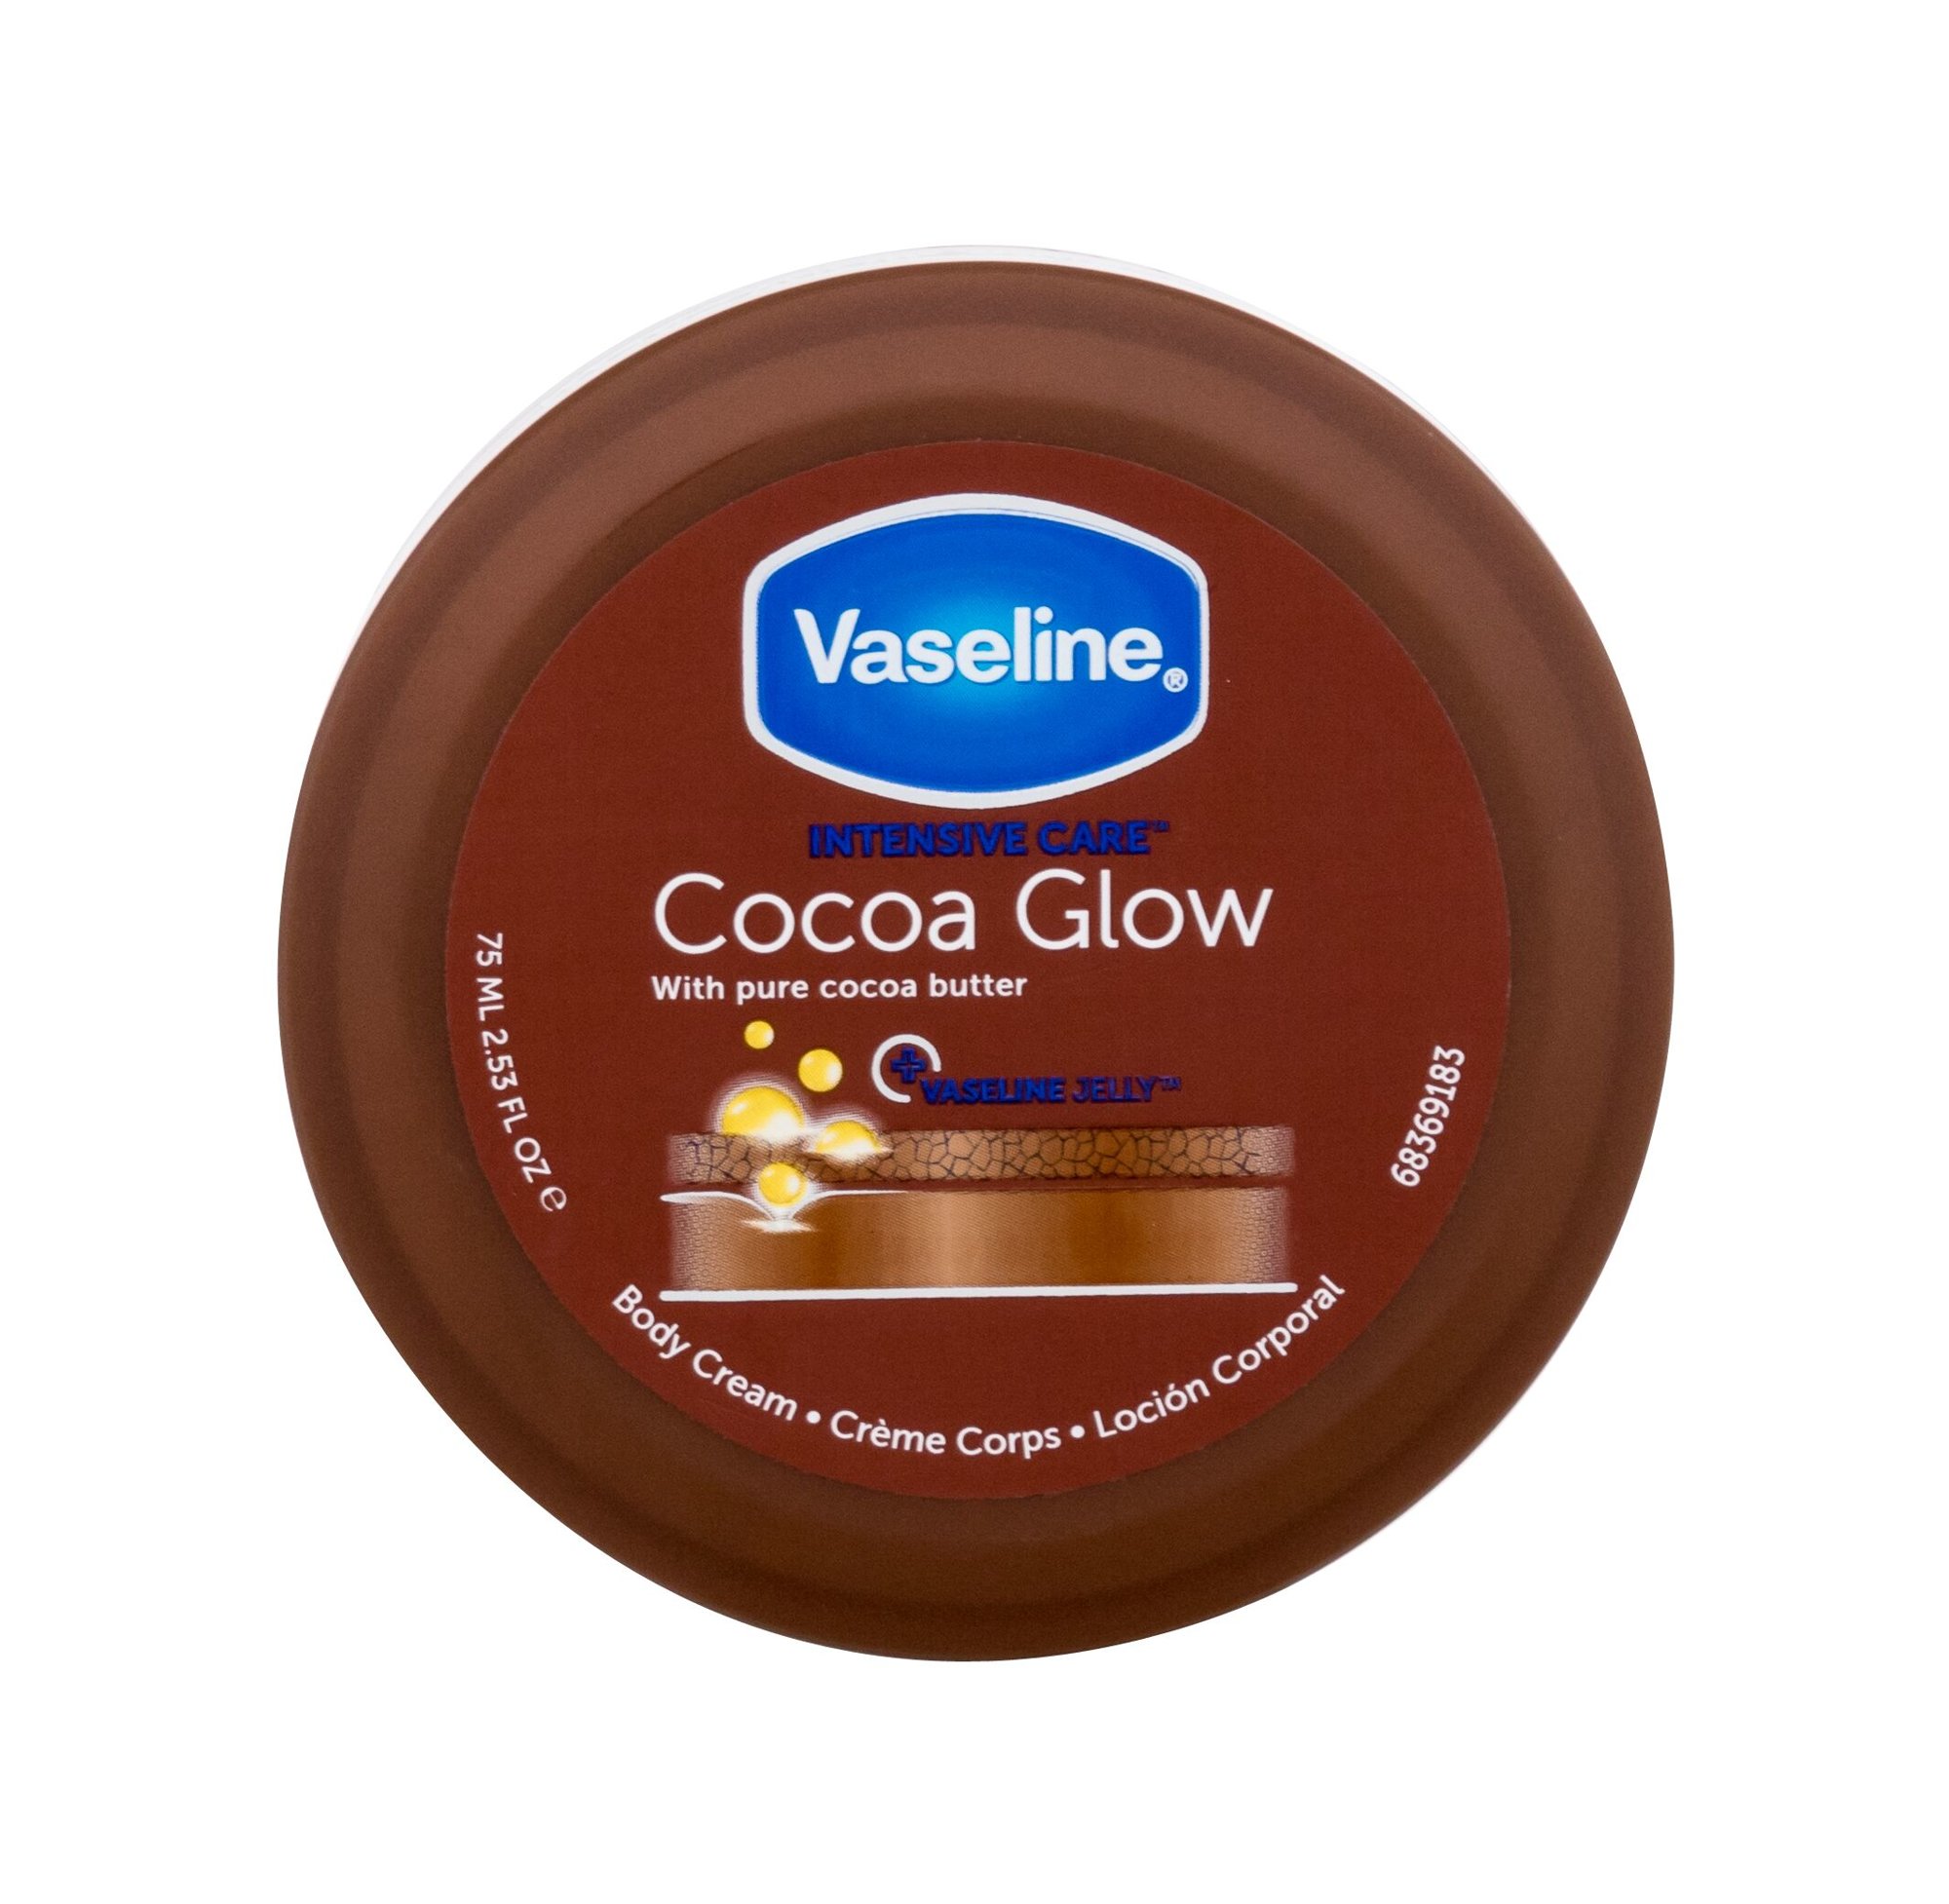 Vaseline Intensive Care Cocoa Glow kūno kremas